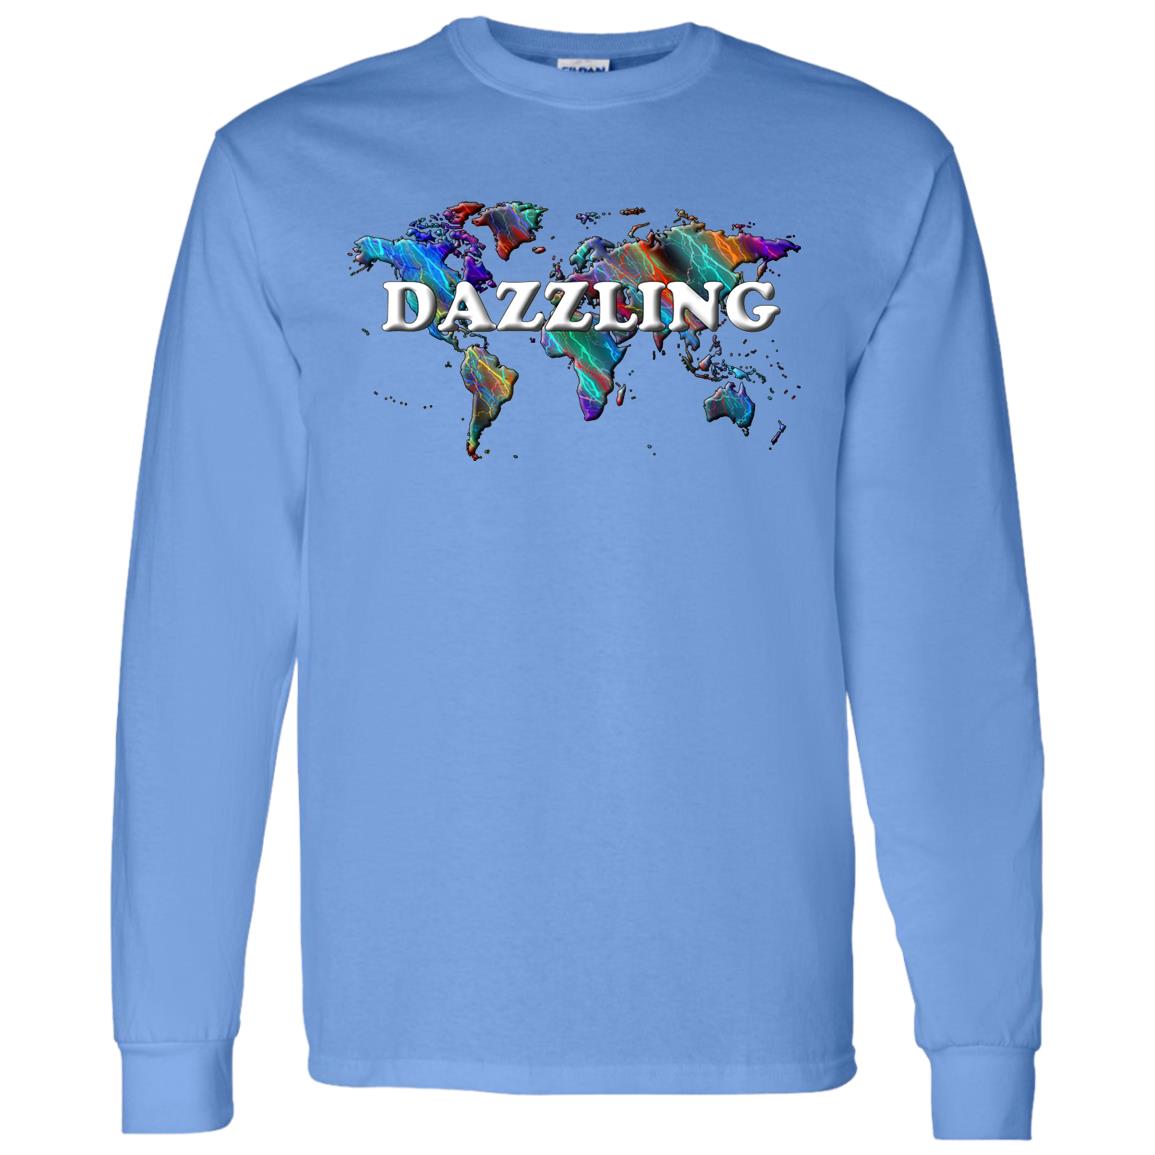 Dazzling Long Sleeve T-Shirt